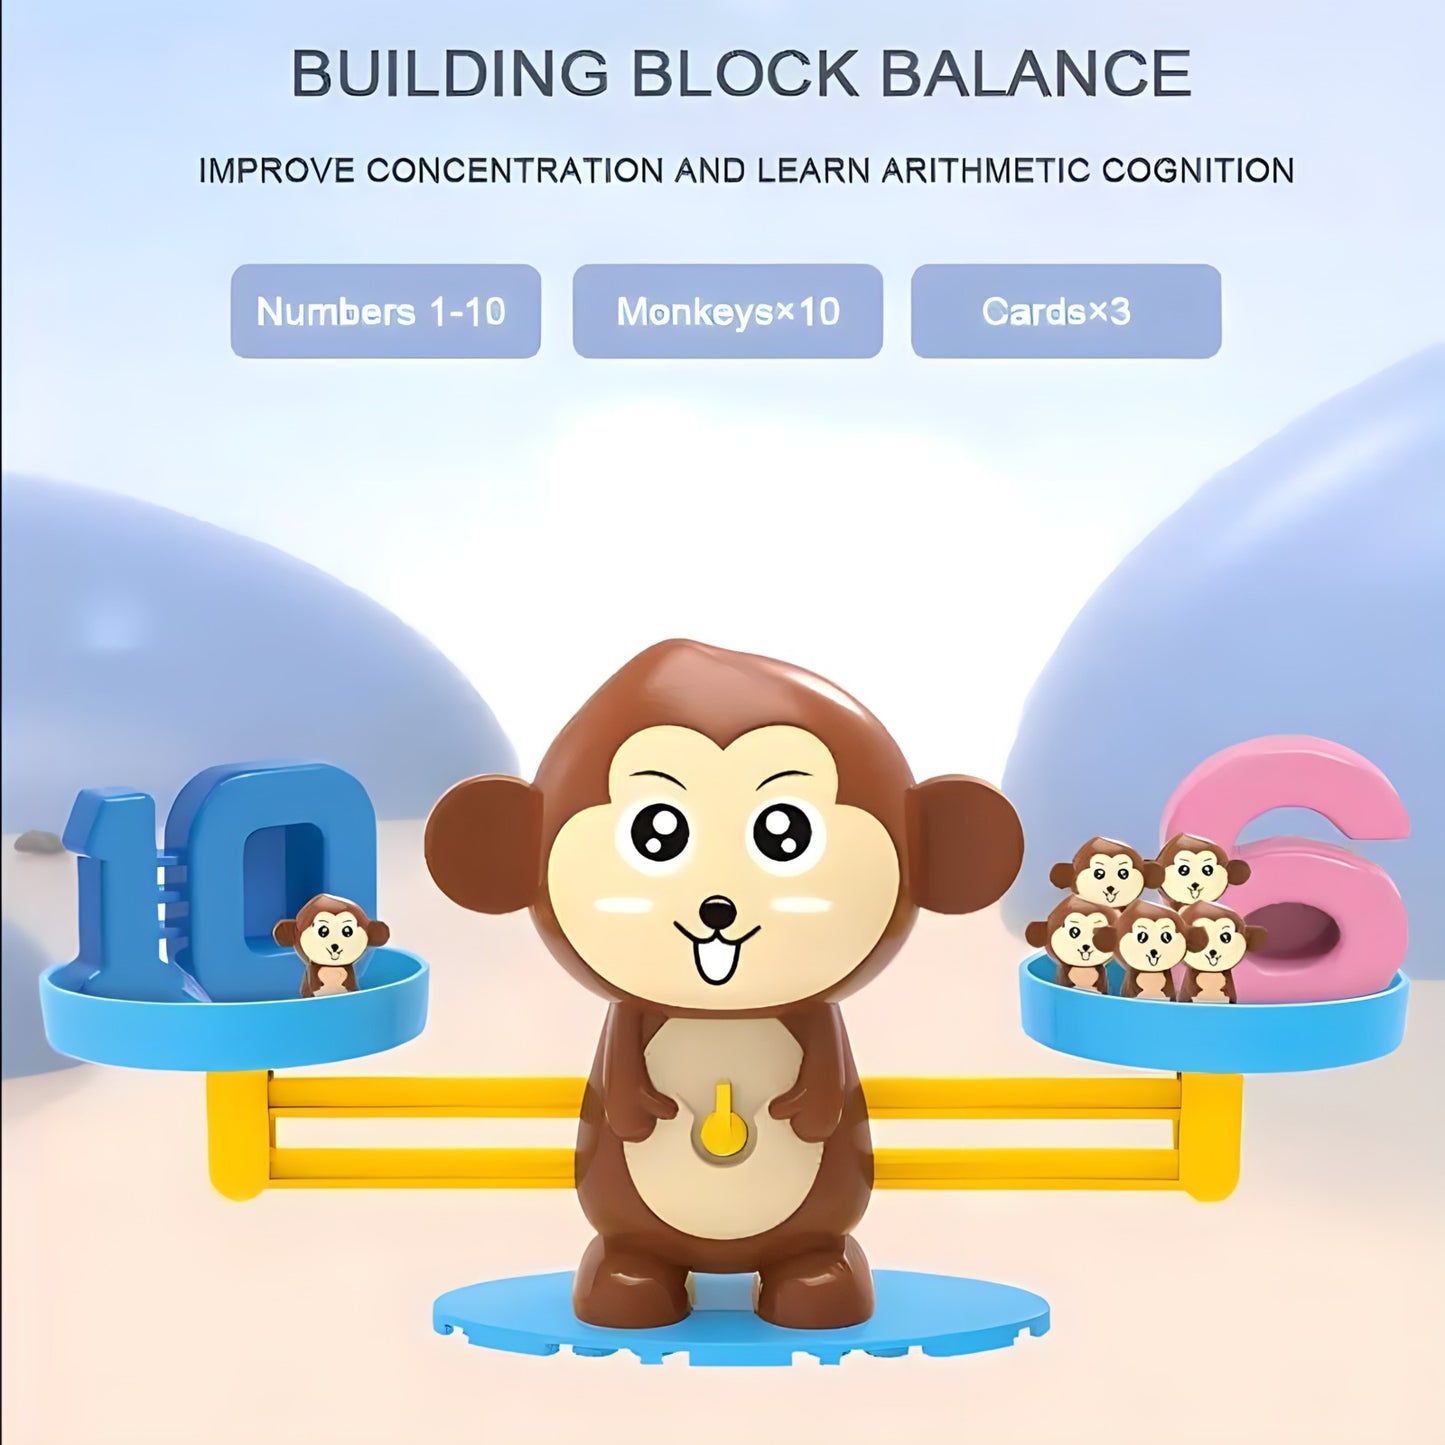 Math Toy Digital Monkey Balance Scale